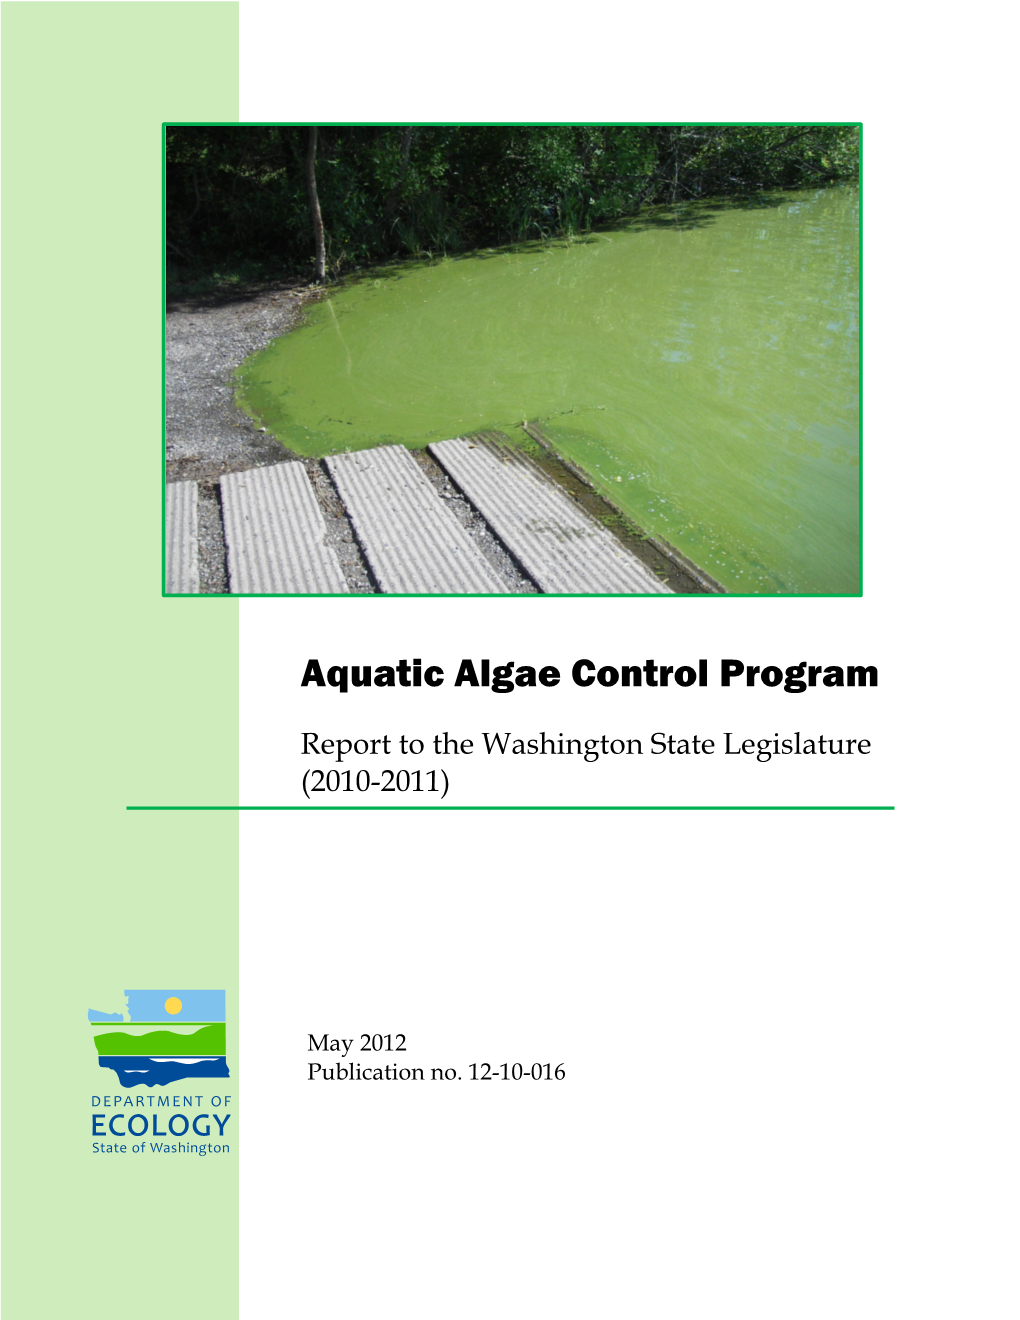 Aquatic Algae Control Program Report for 2010-2011